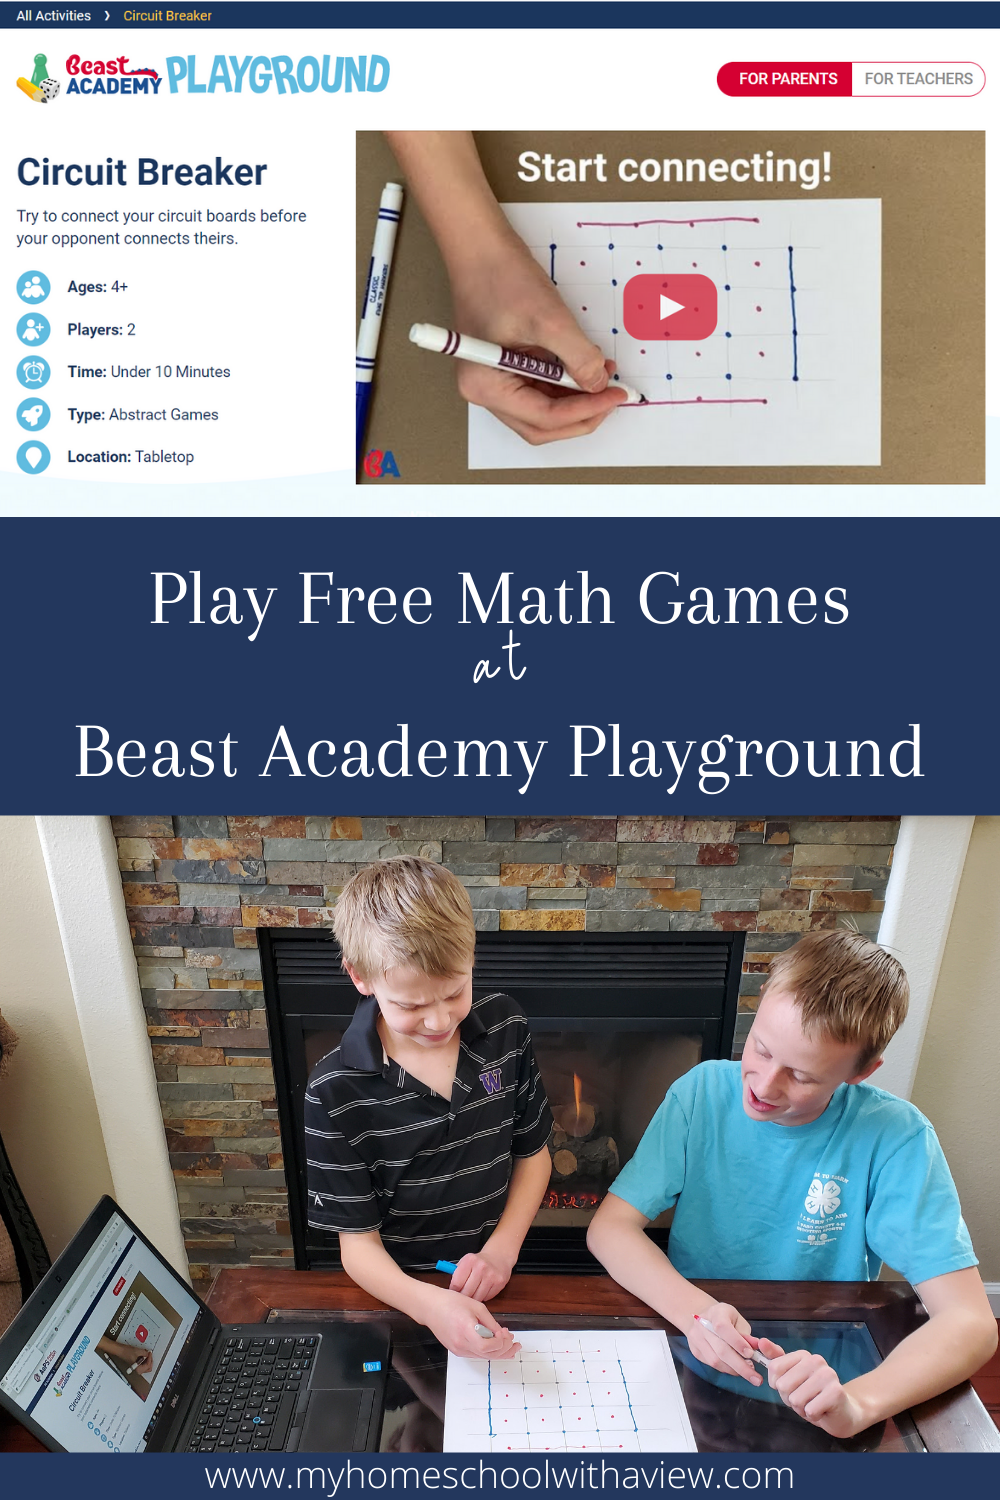 Play Free Math Games at Beast Academy Playground